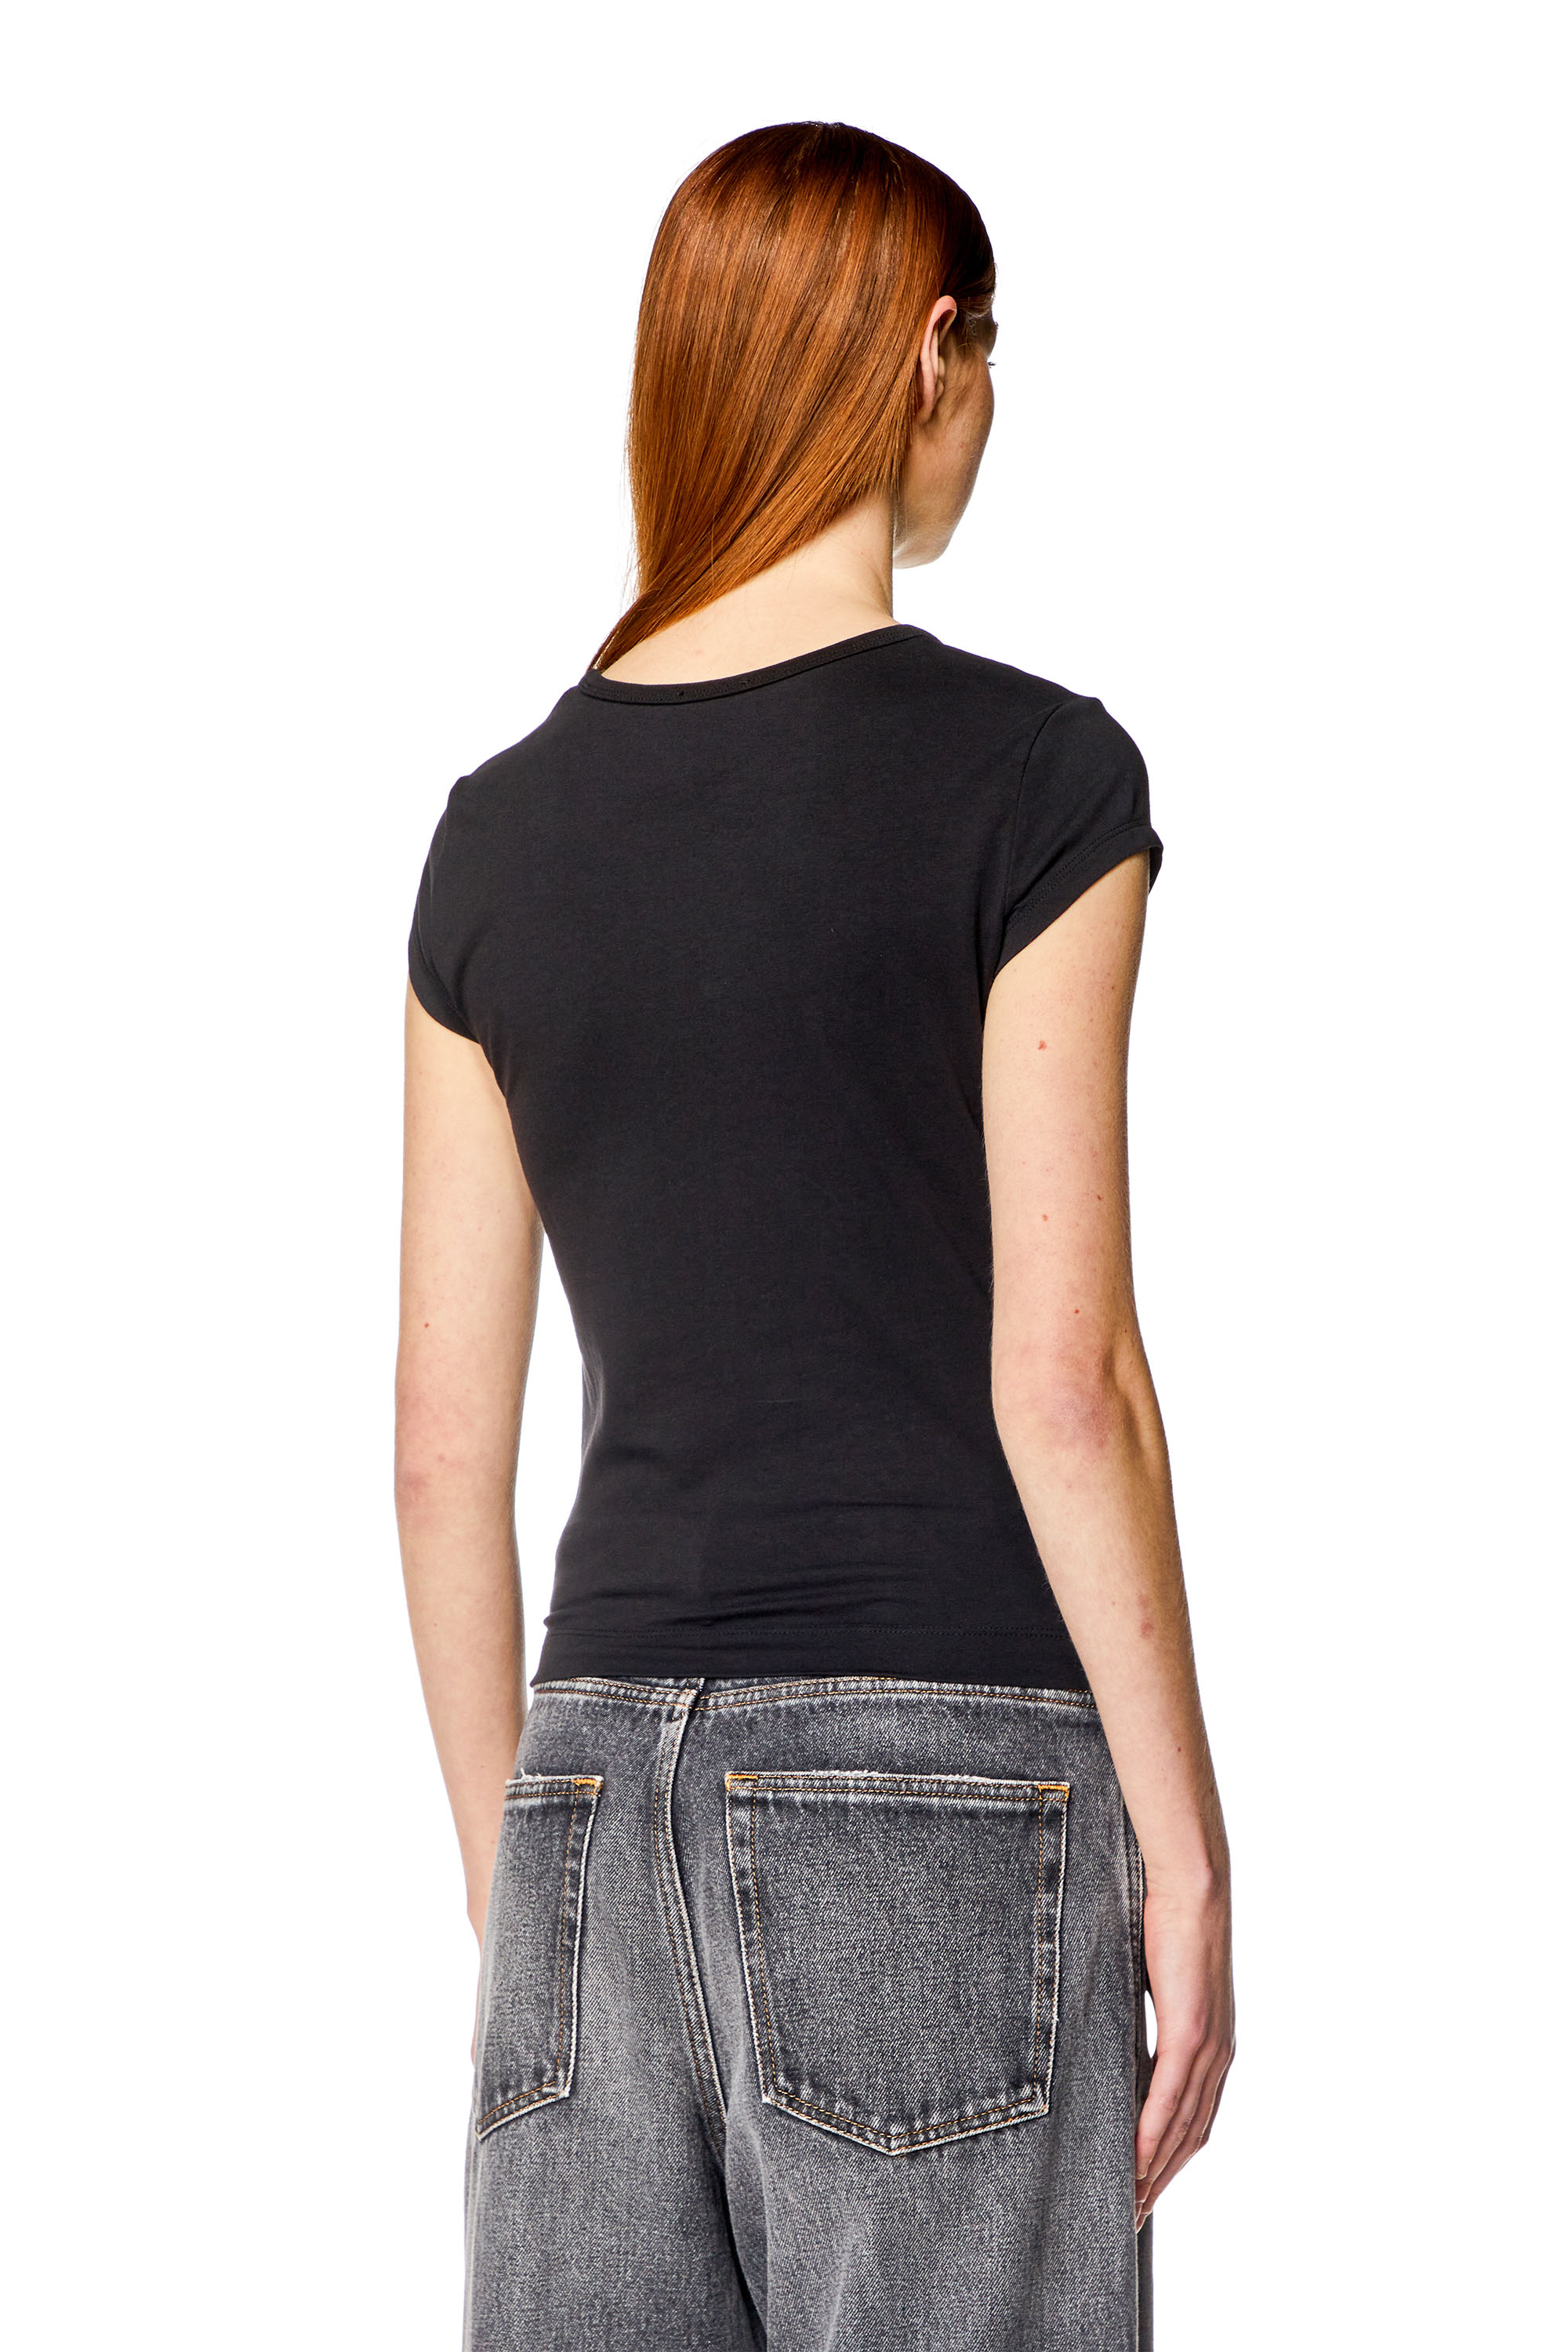 Mink Fur Slim Pit Stripe Knit Bottom Shirt Inner Pullover Women Sweater -  China Women Shirt and Corp Top price